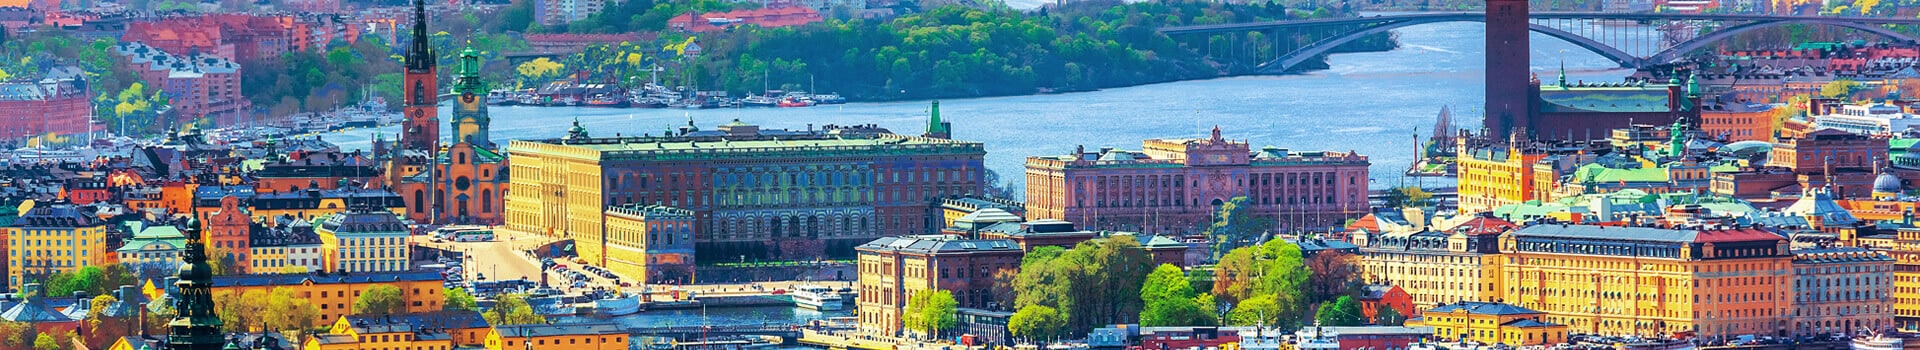 London - Stockholm